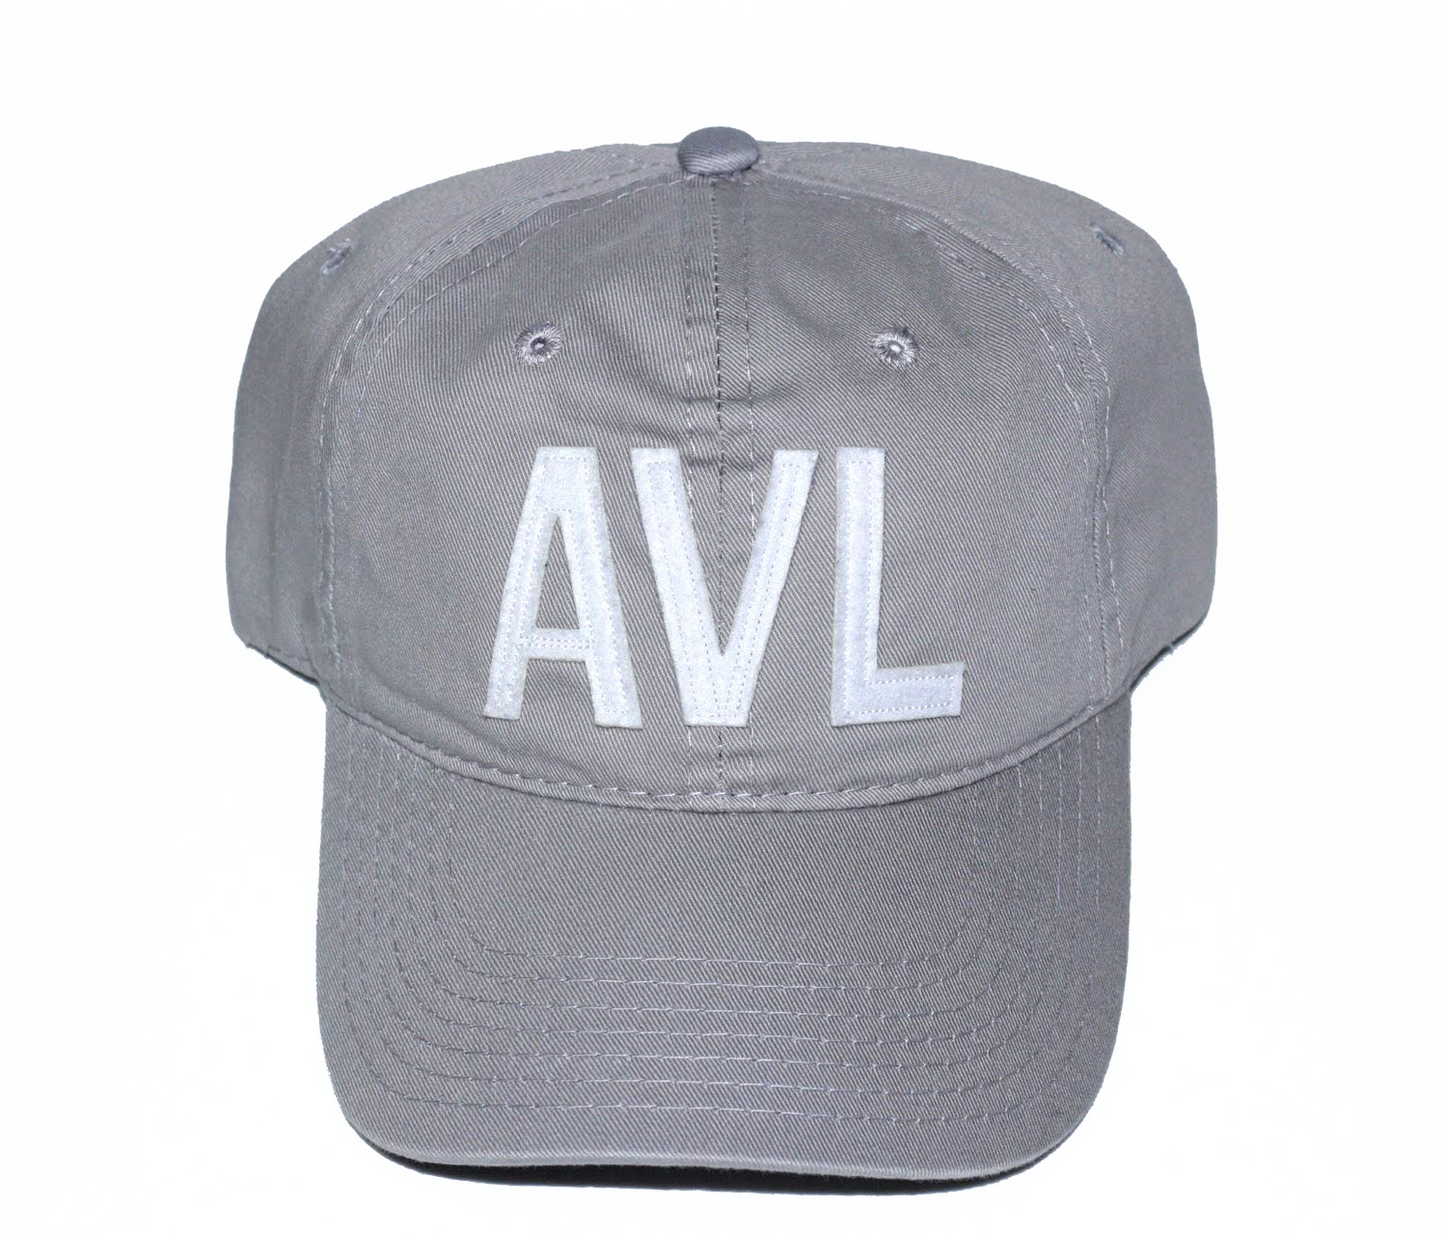 AVL - Asheville, NC Hat